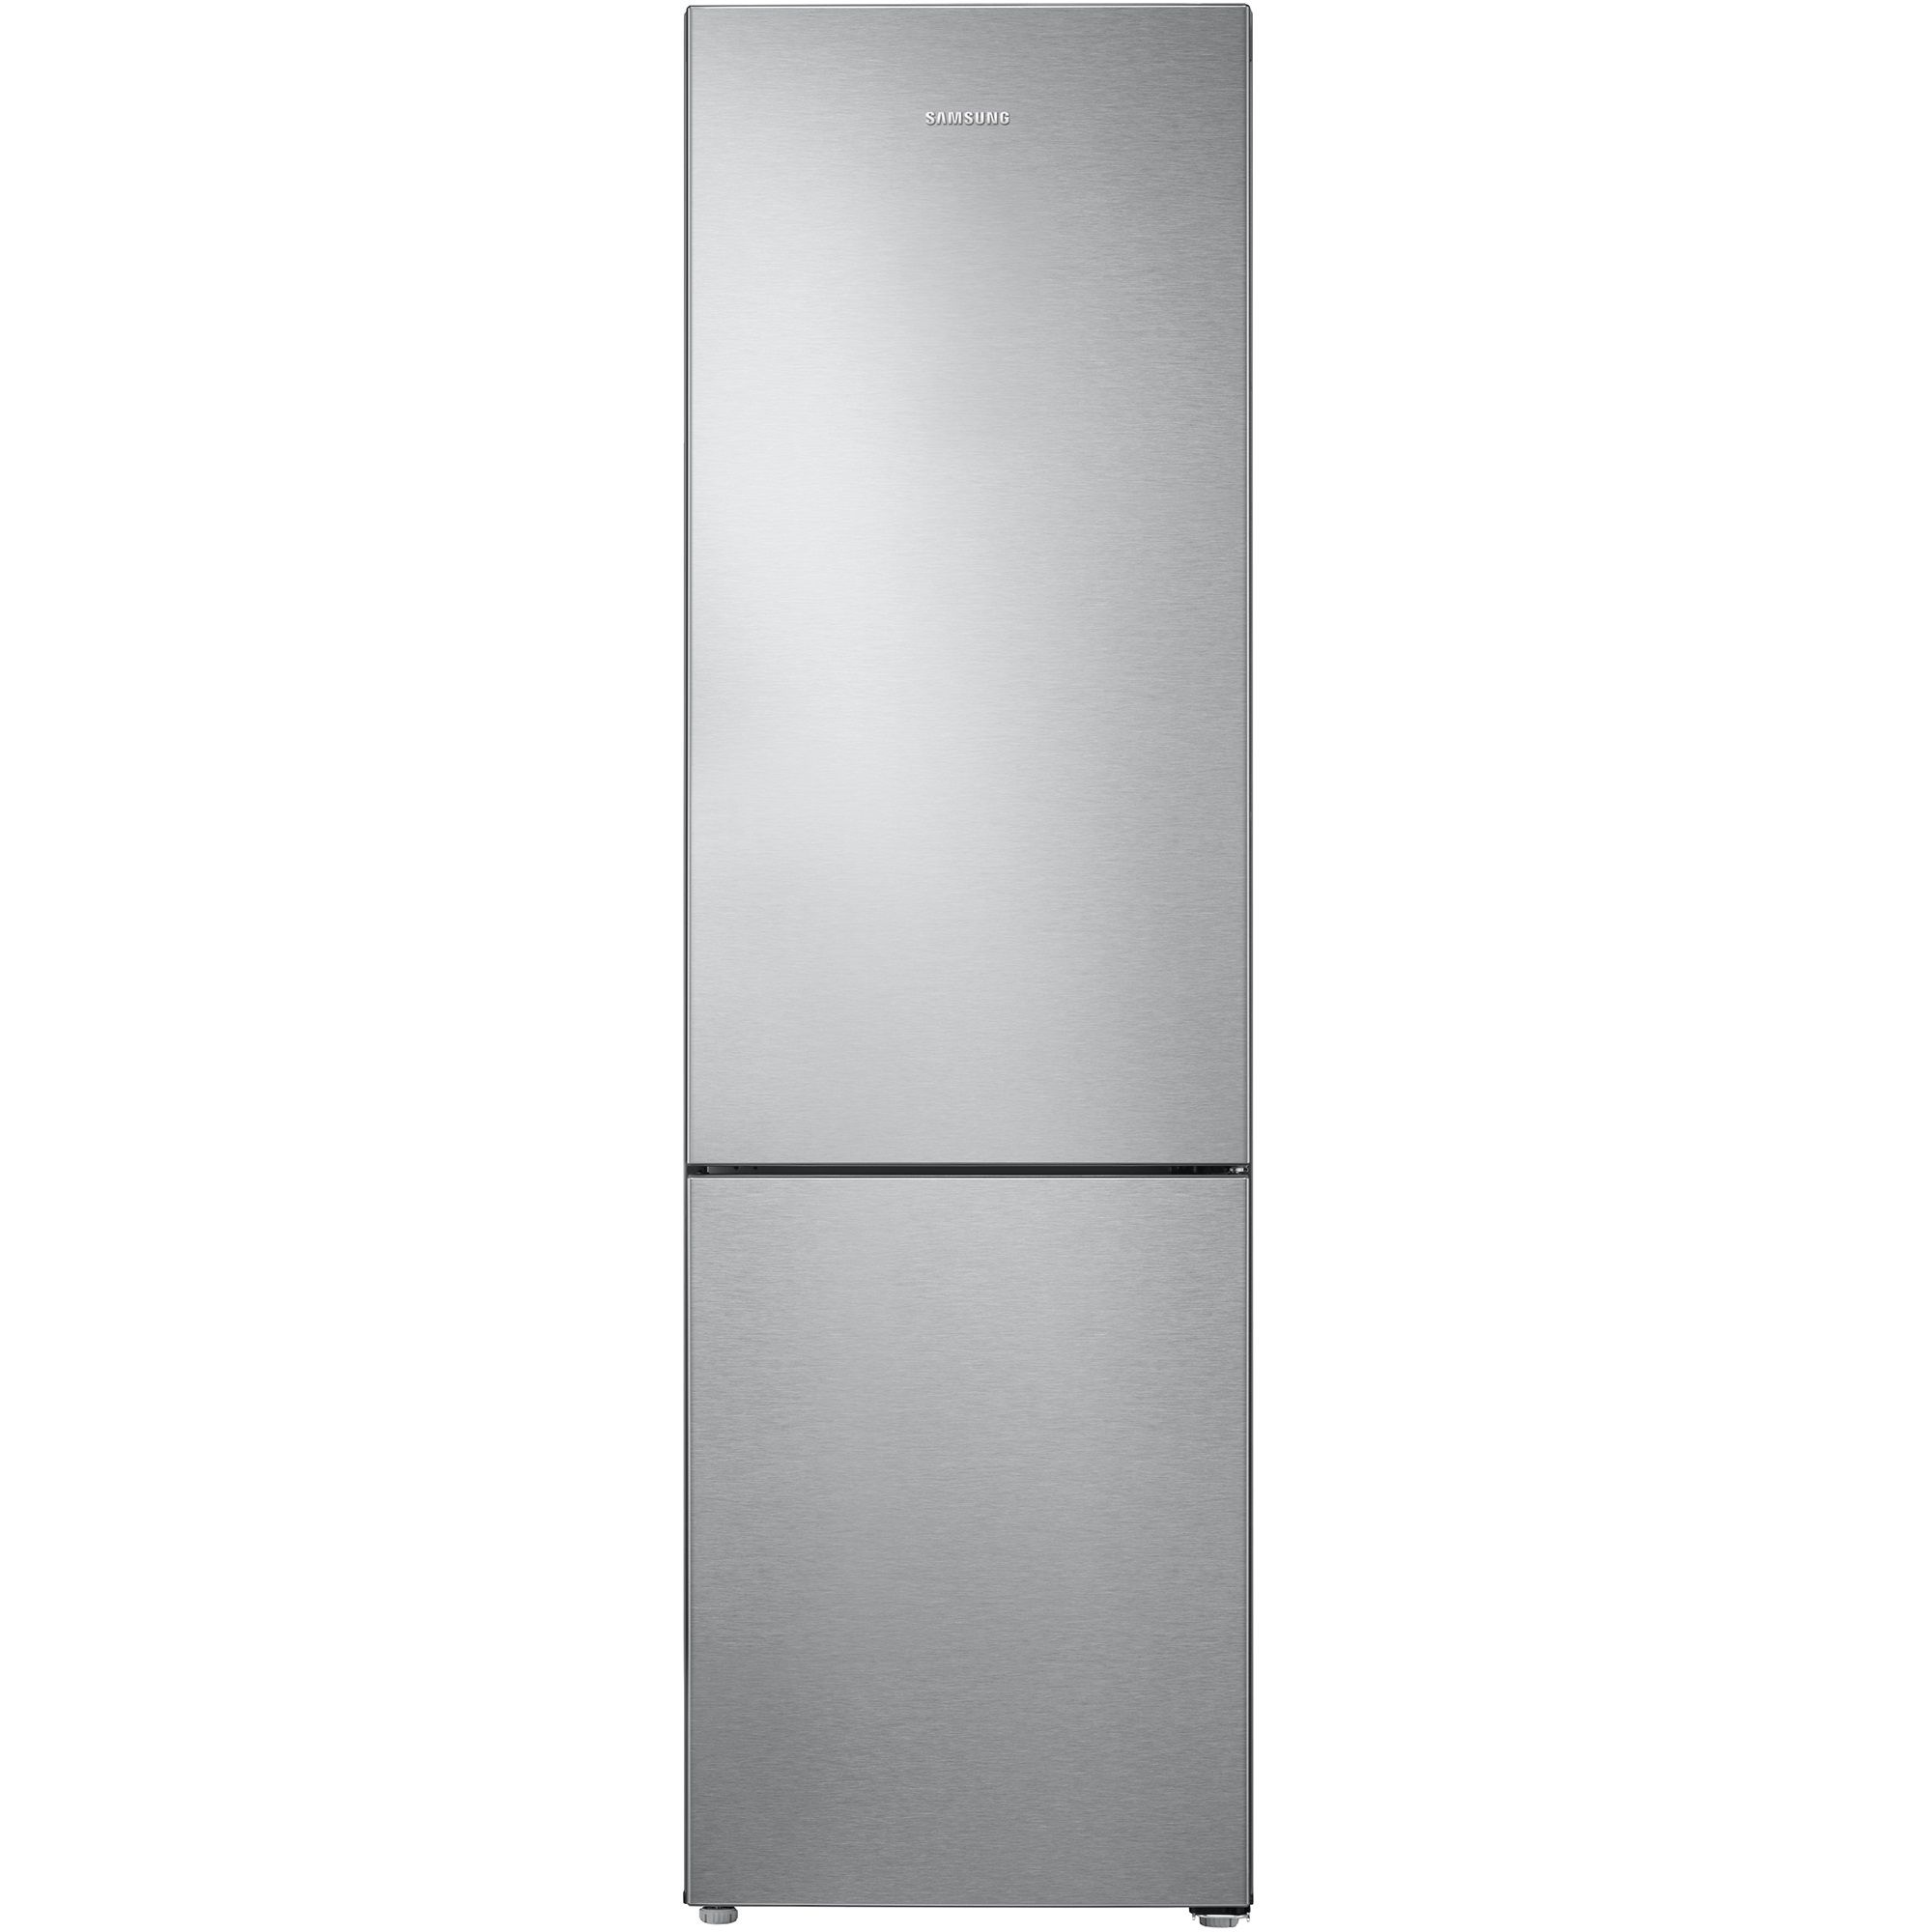  Combina frigorifica Samsung RB37J5010WW/EF, 367 l, Clasa A+, Alb 